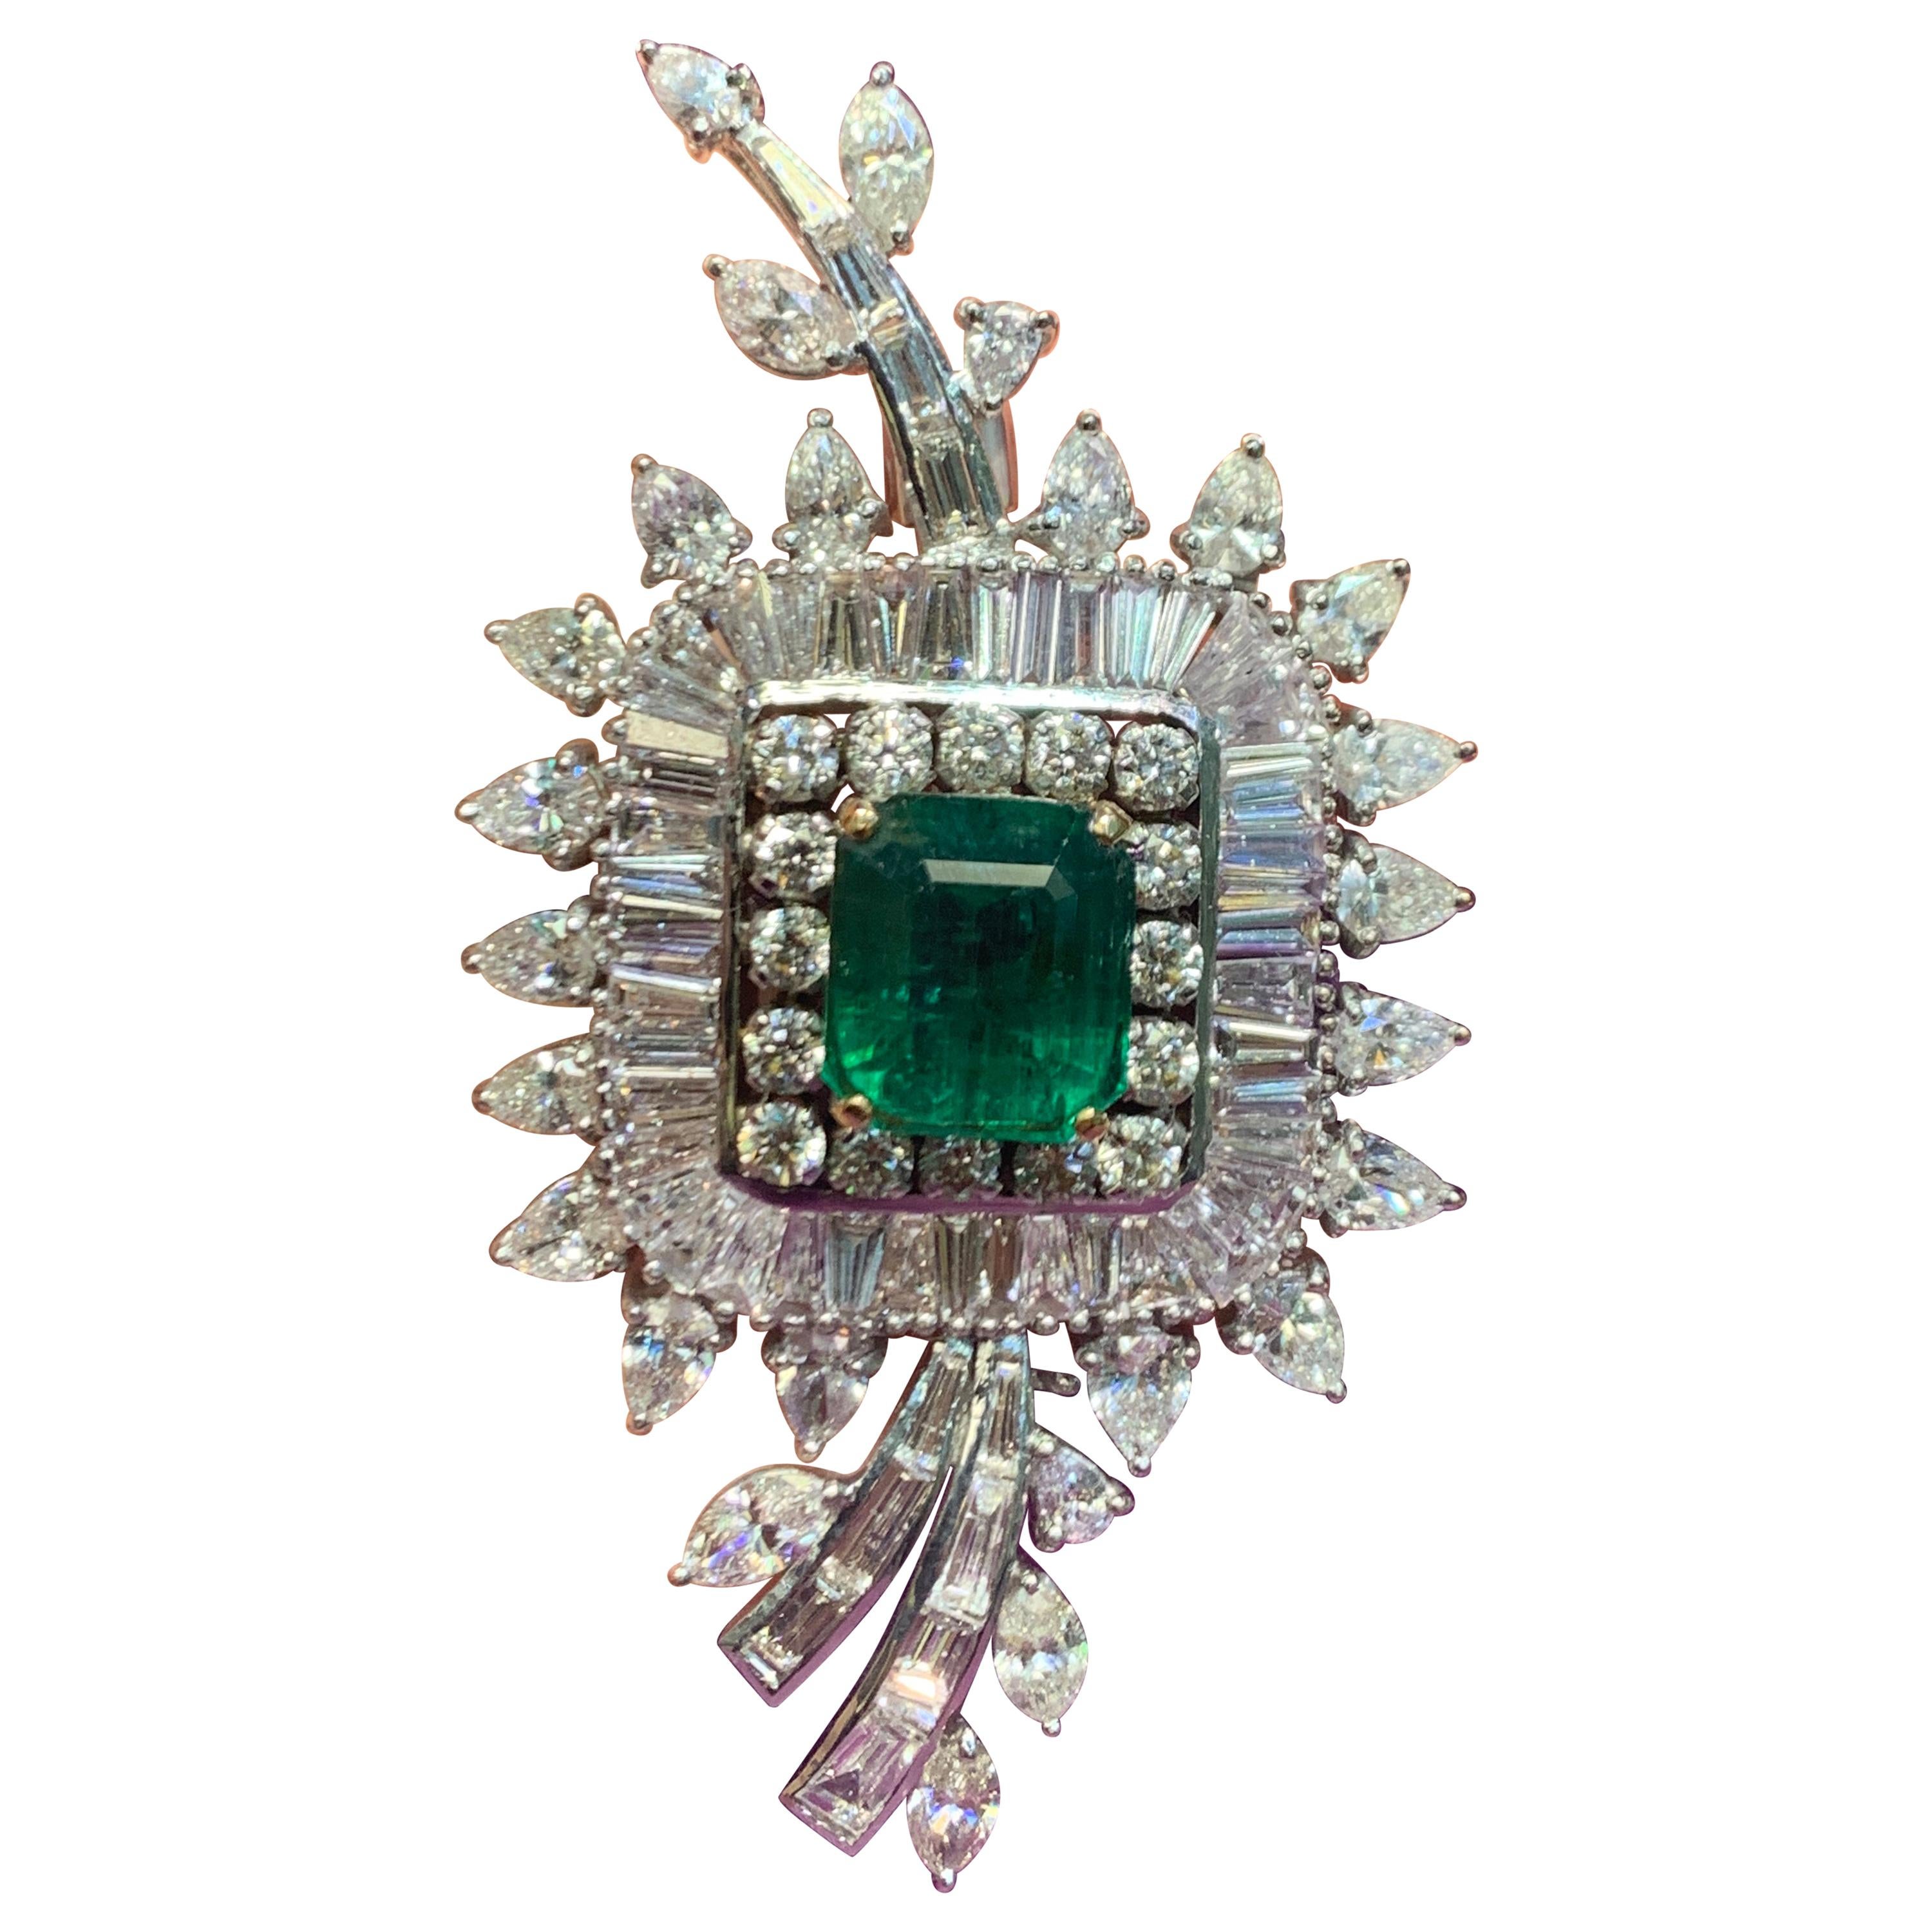 Very Fine Emerald & Diamond Brooch